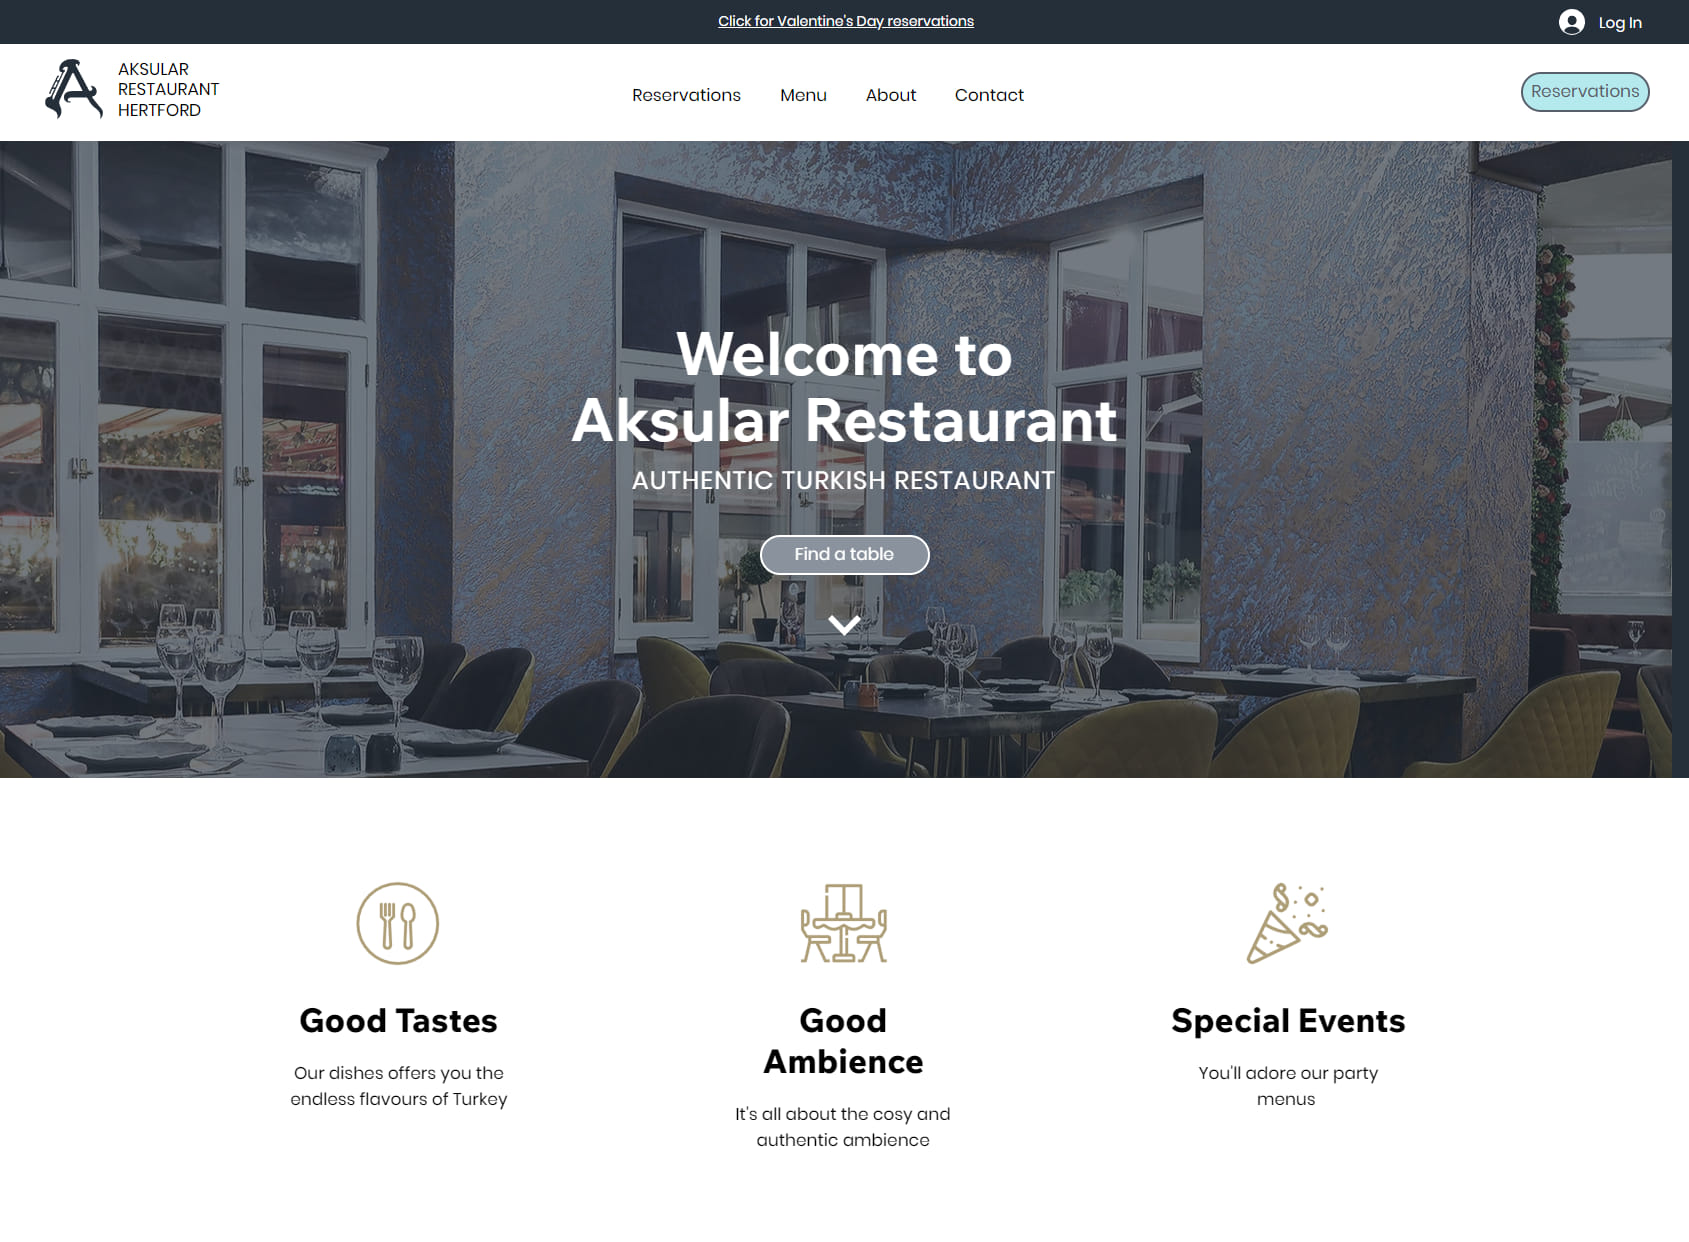 Aksular Restaurant